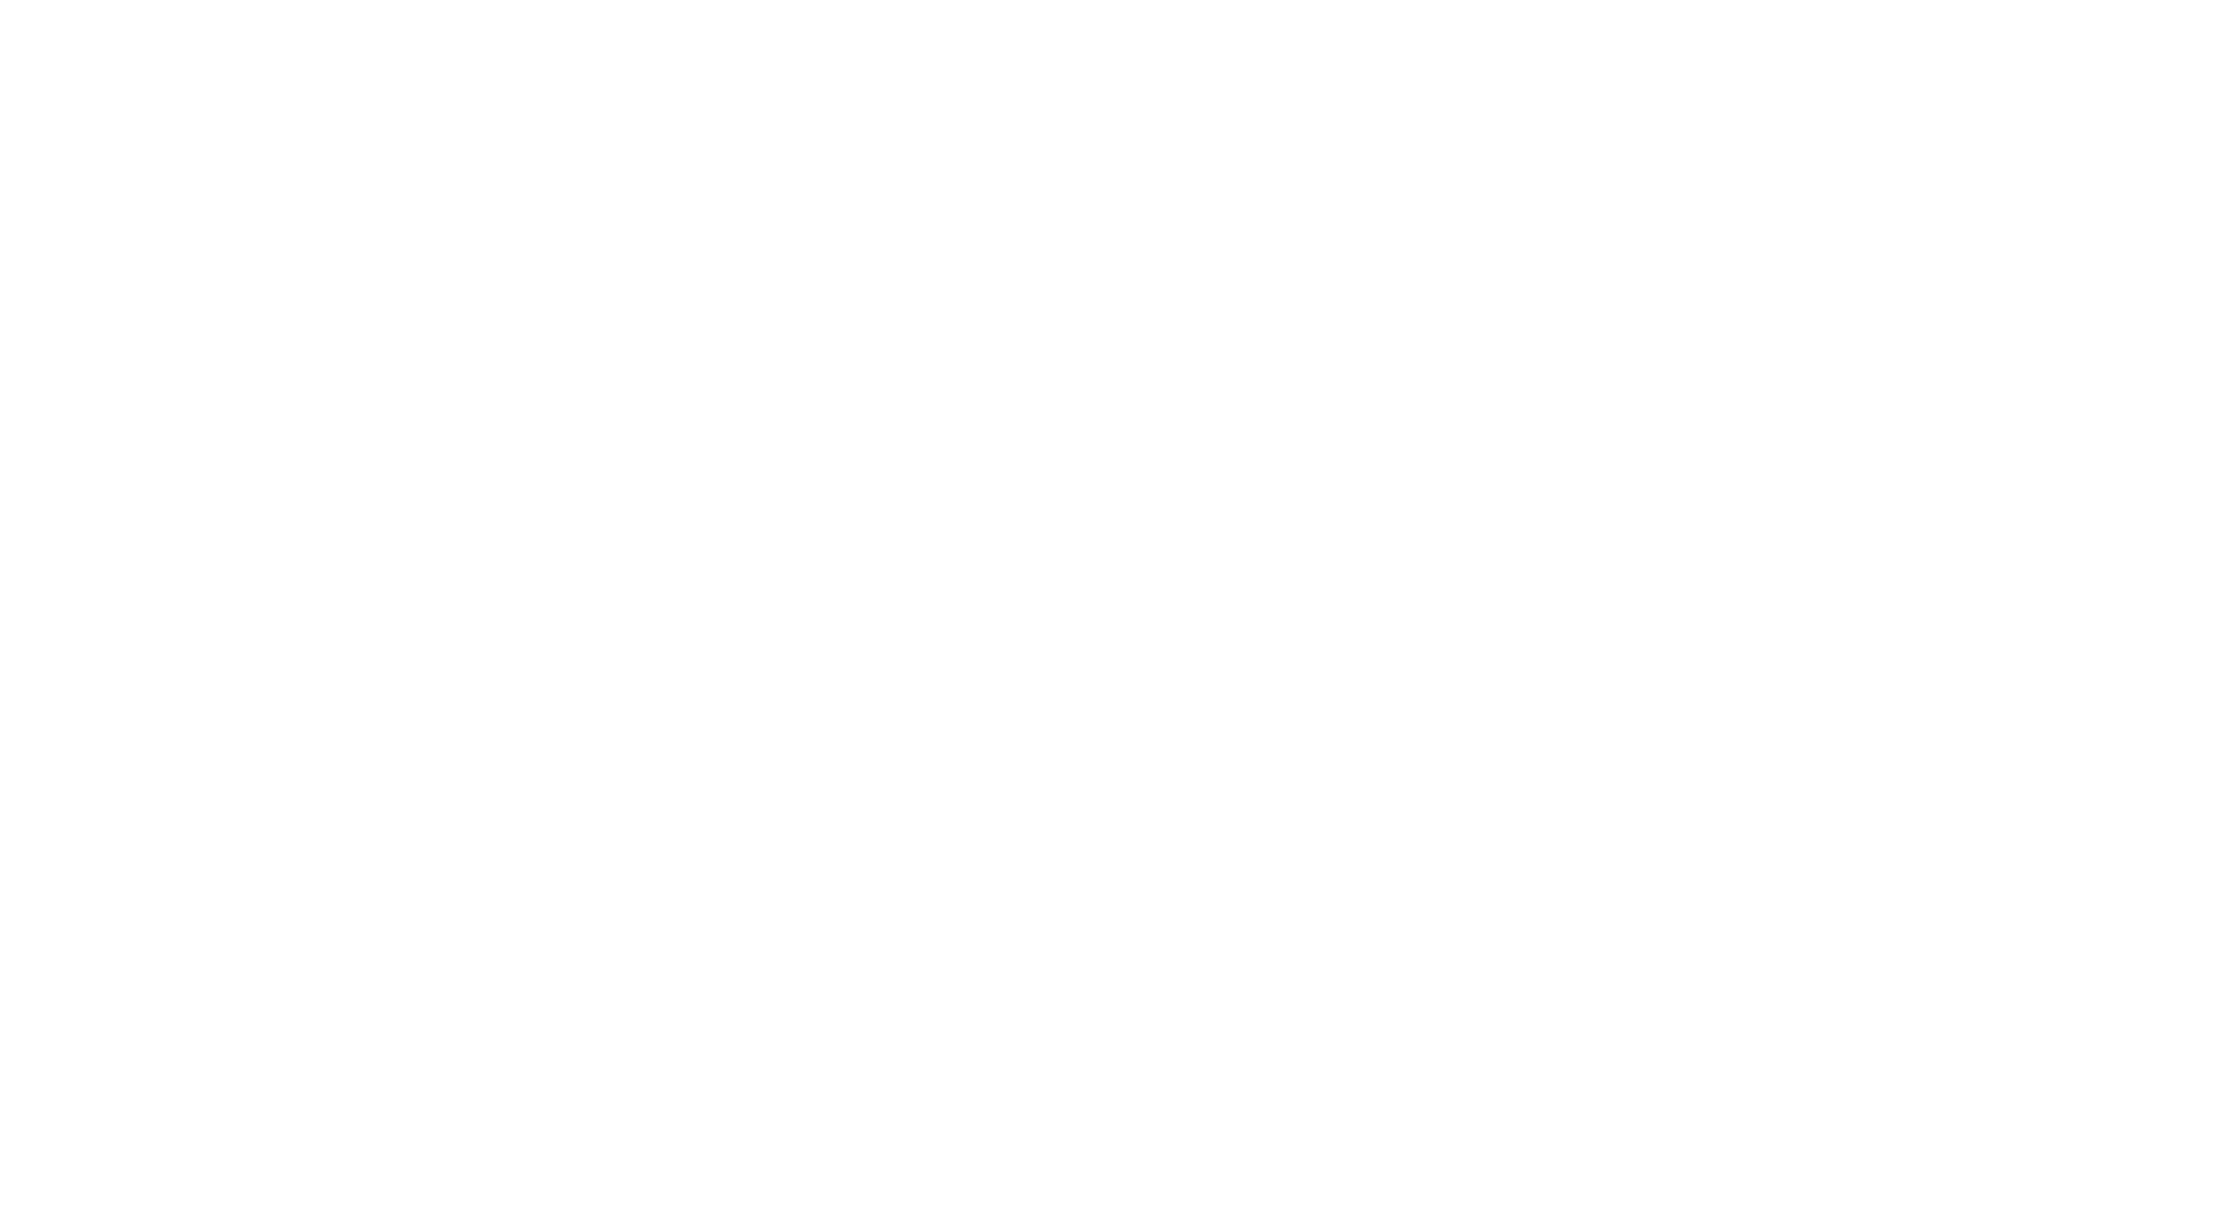 Wordpress White Logo PNG HQ Image pngteam.com